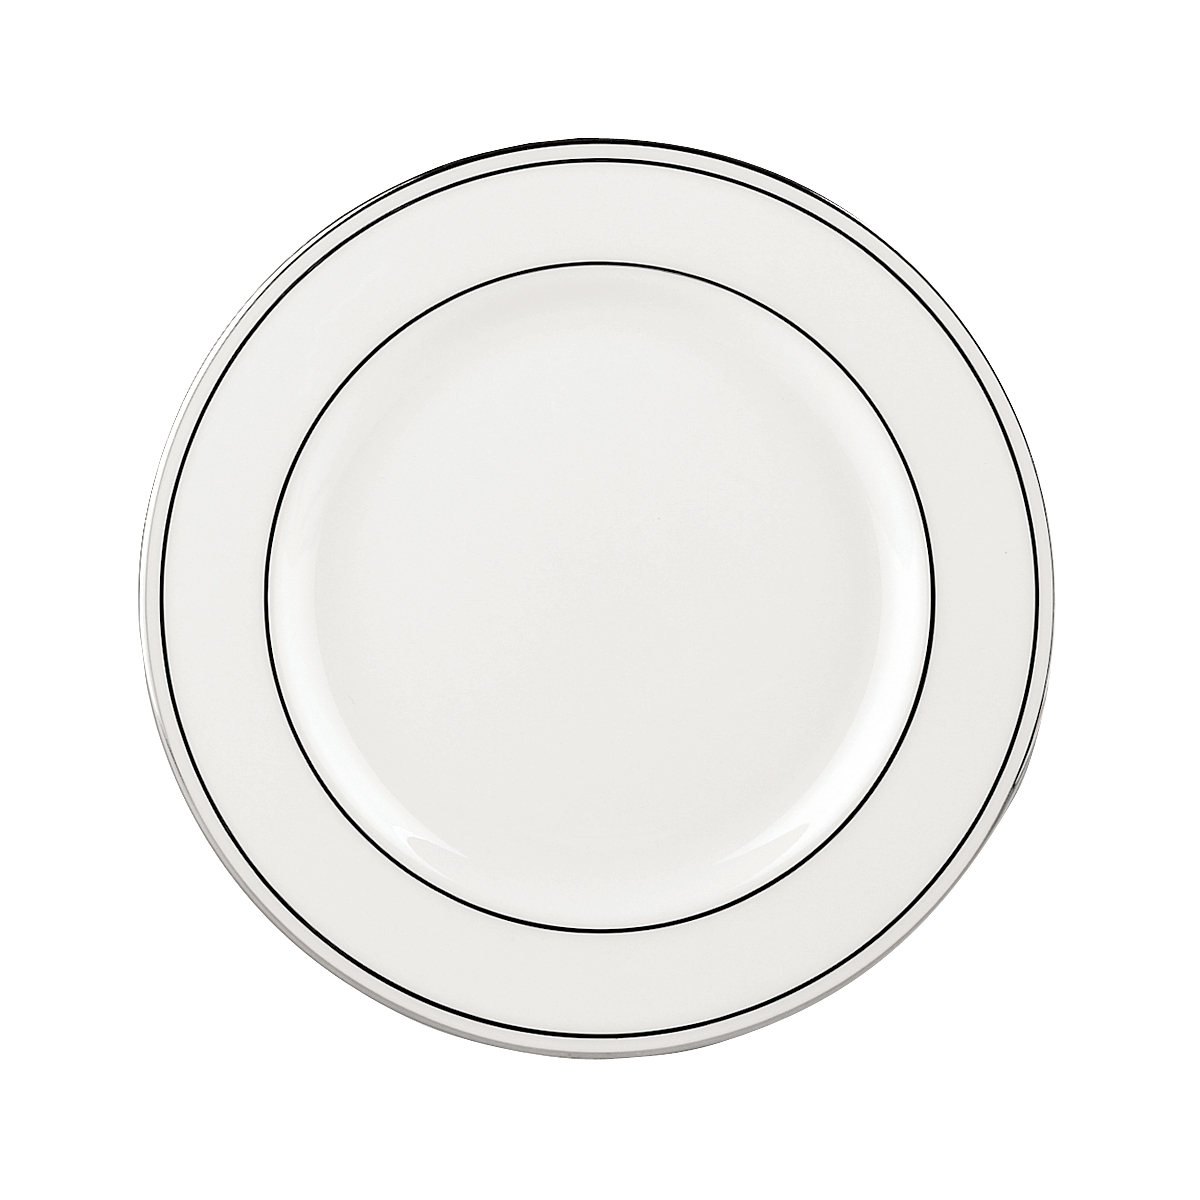 Lenox(R) Federal Platinum(tm) Butter Plate